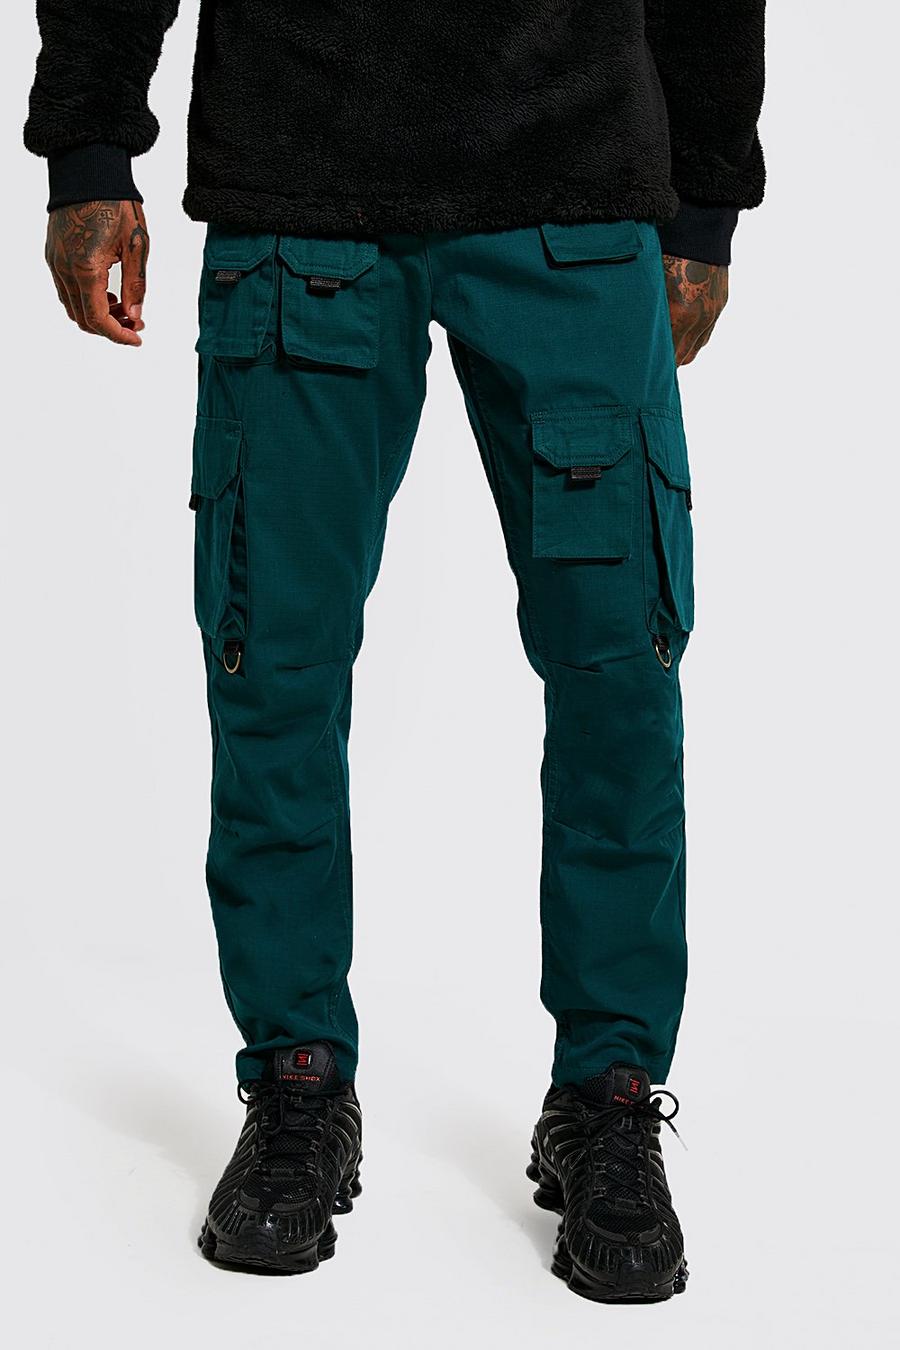 Pantaloni Cargo dritti Man in nylon ripstop, Green verde image number 1